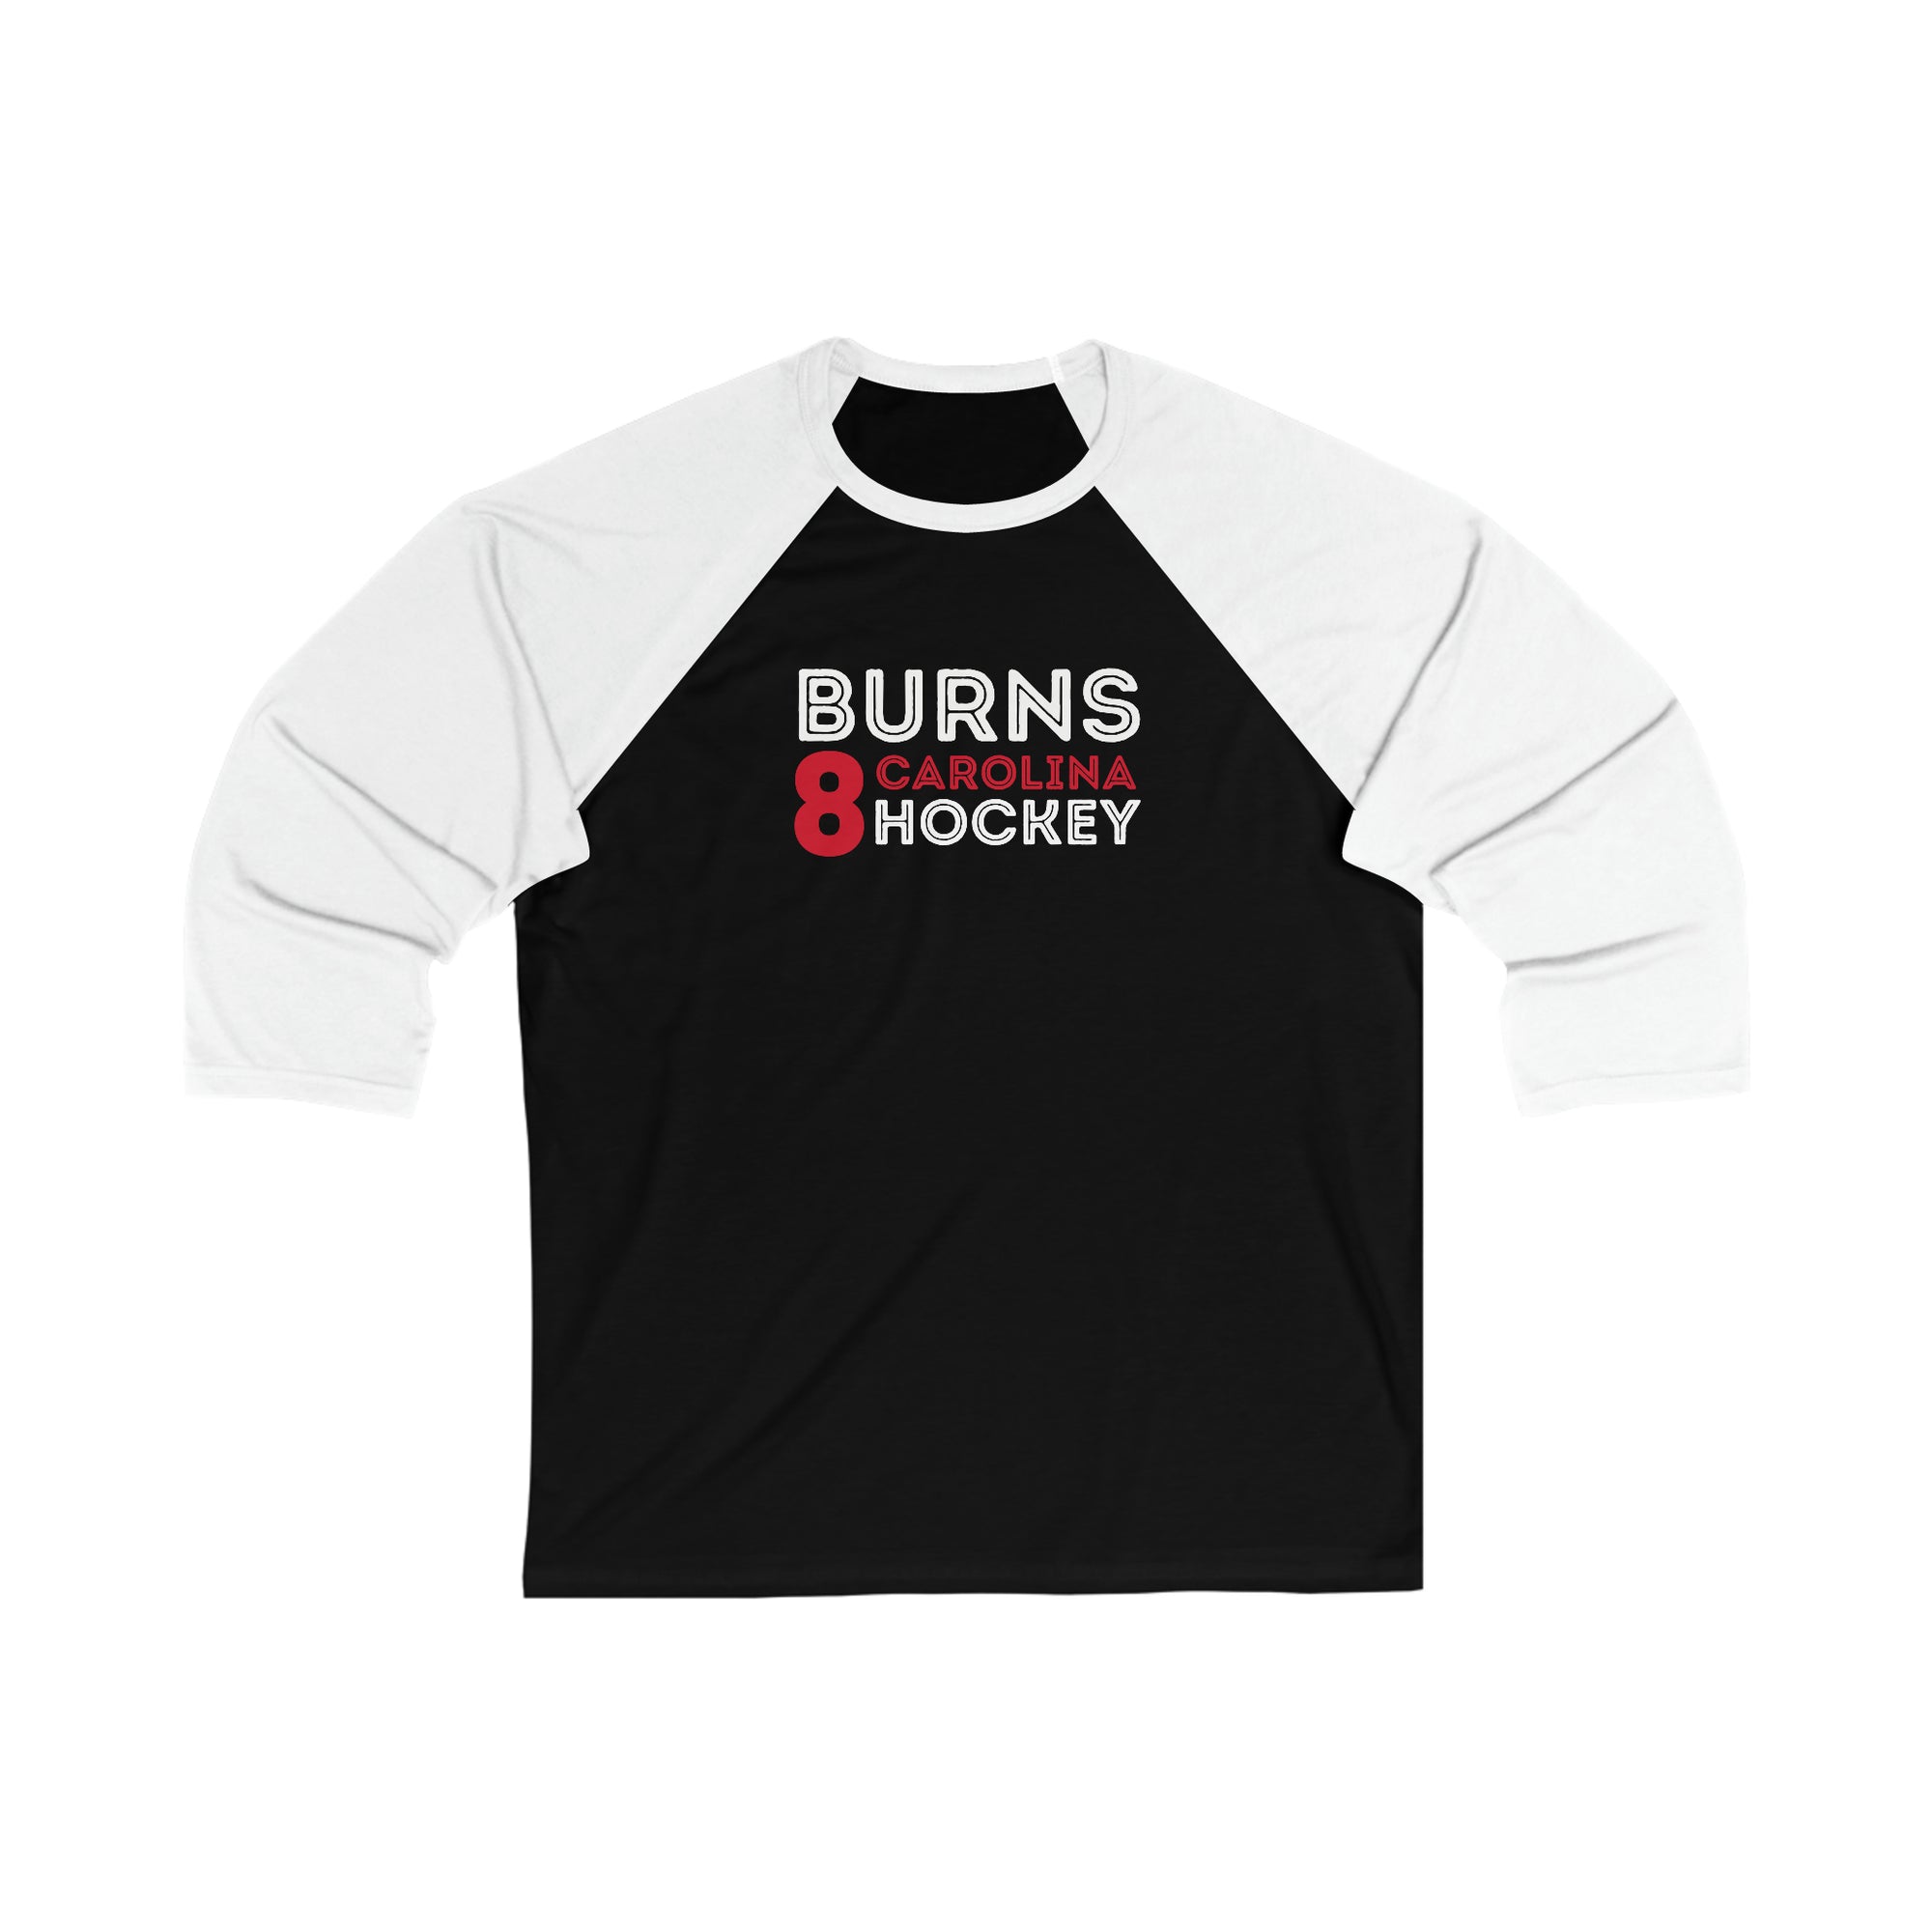 Burns 8 Carolina Hockey Grafitti Wall Design Unisex Tri-Blend 3/4 Sleeve Raglan Baseball Shirt